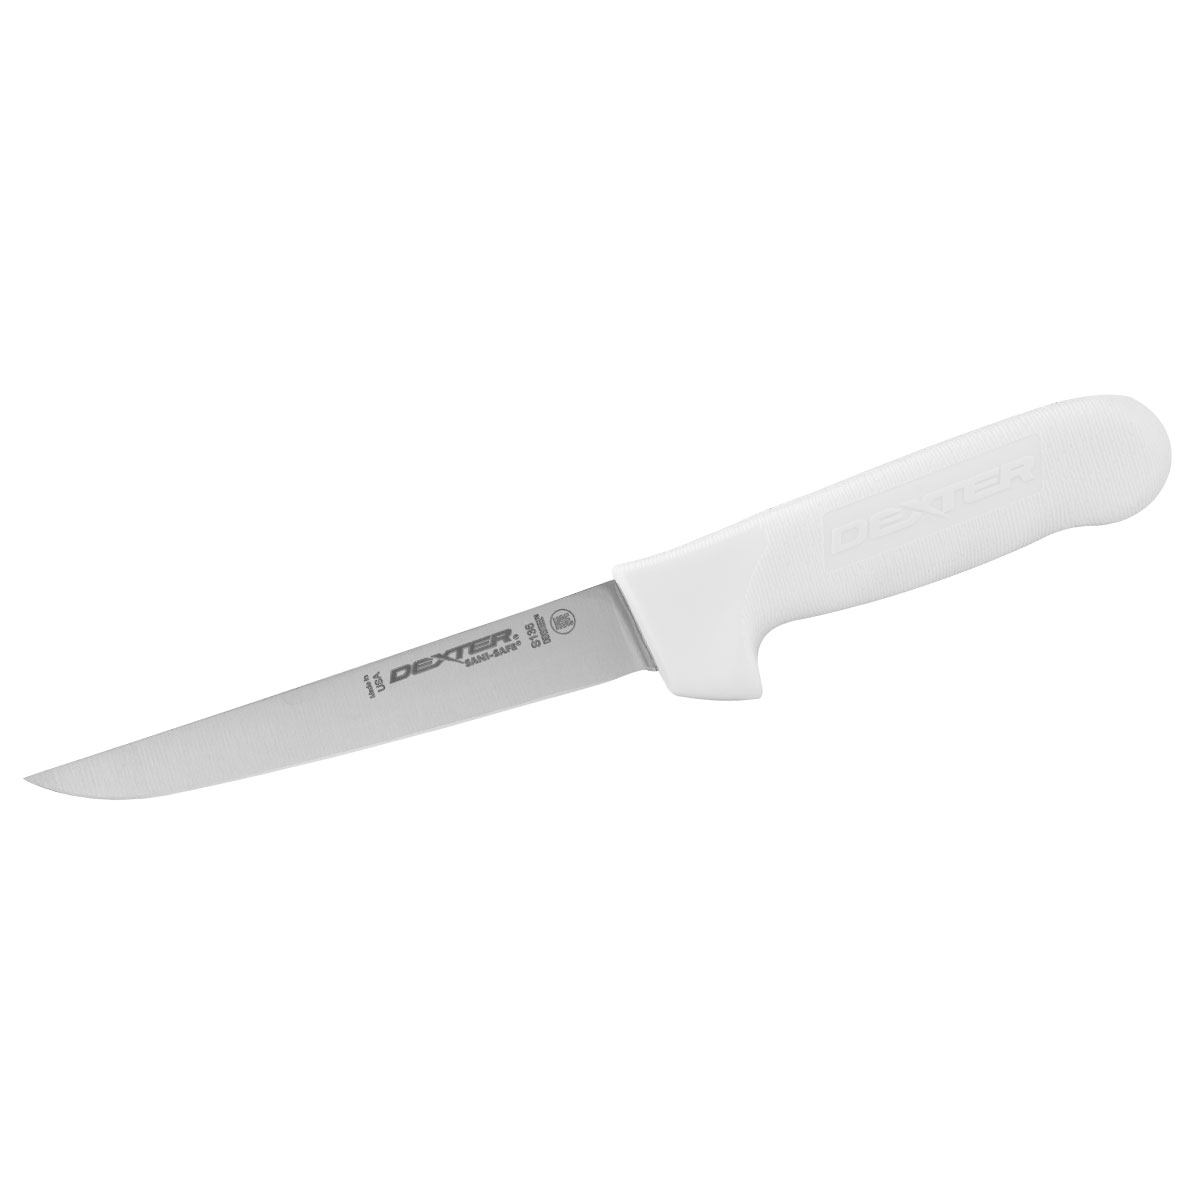 Dexter Boning Knife, 15cm (6) - Stiff, Sanisafe - White